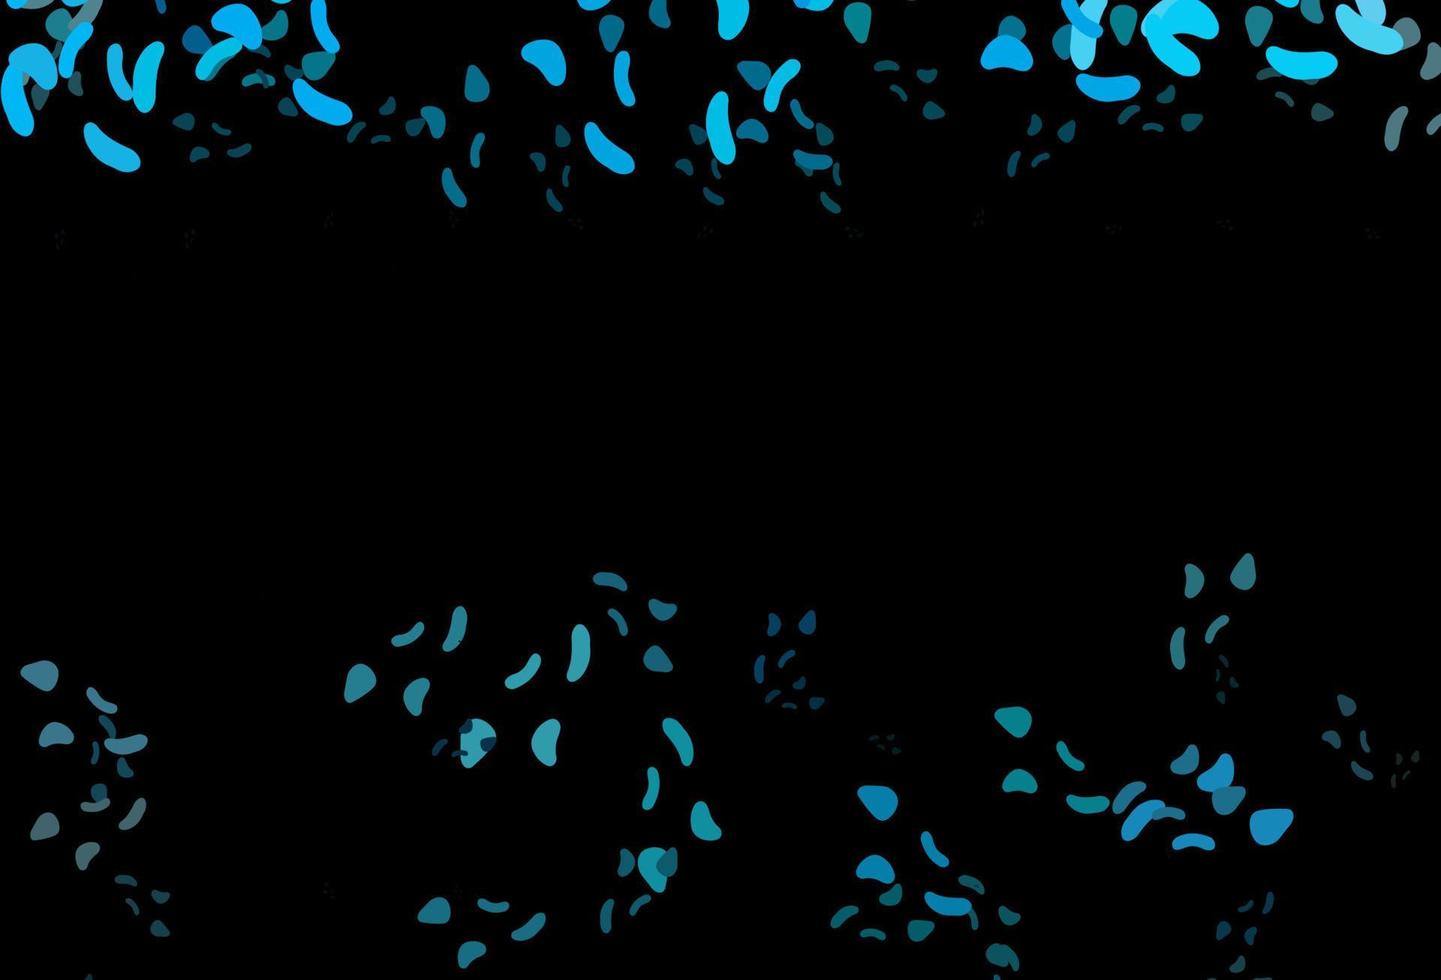 modelo de vetor azul escuro com formas de memphis.